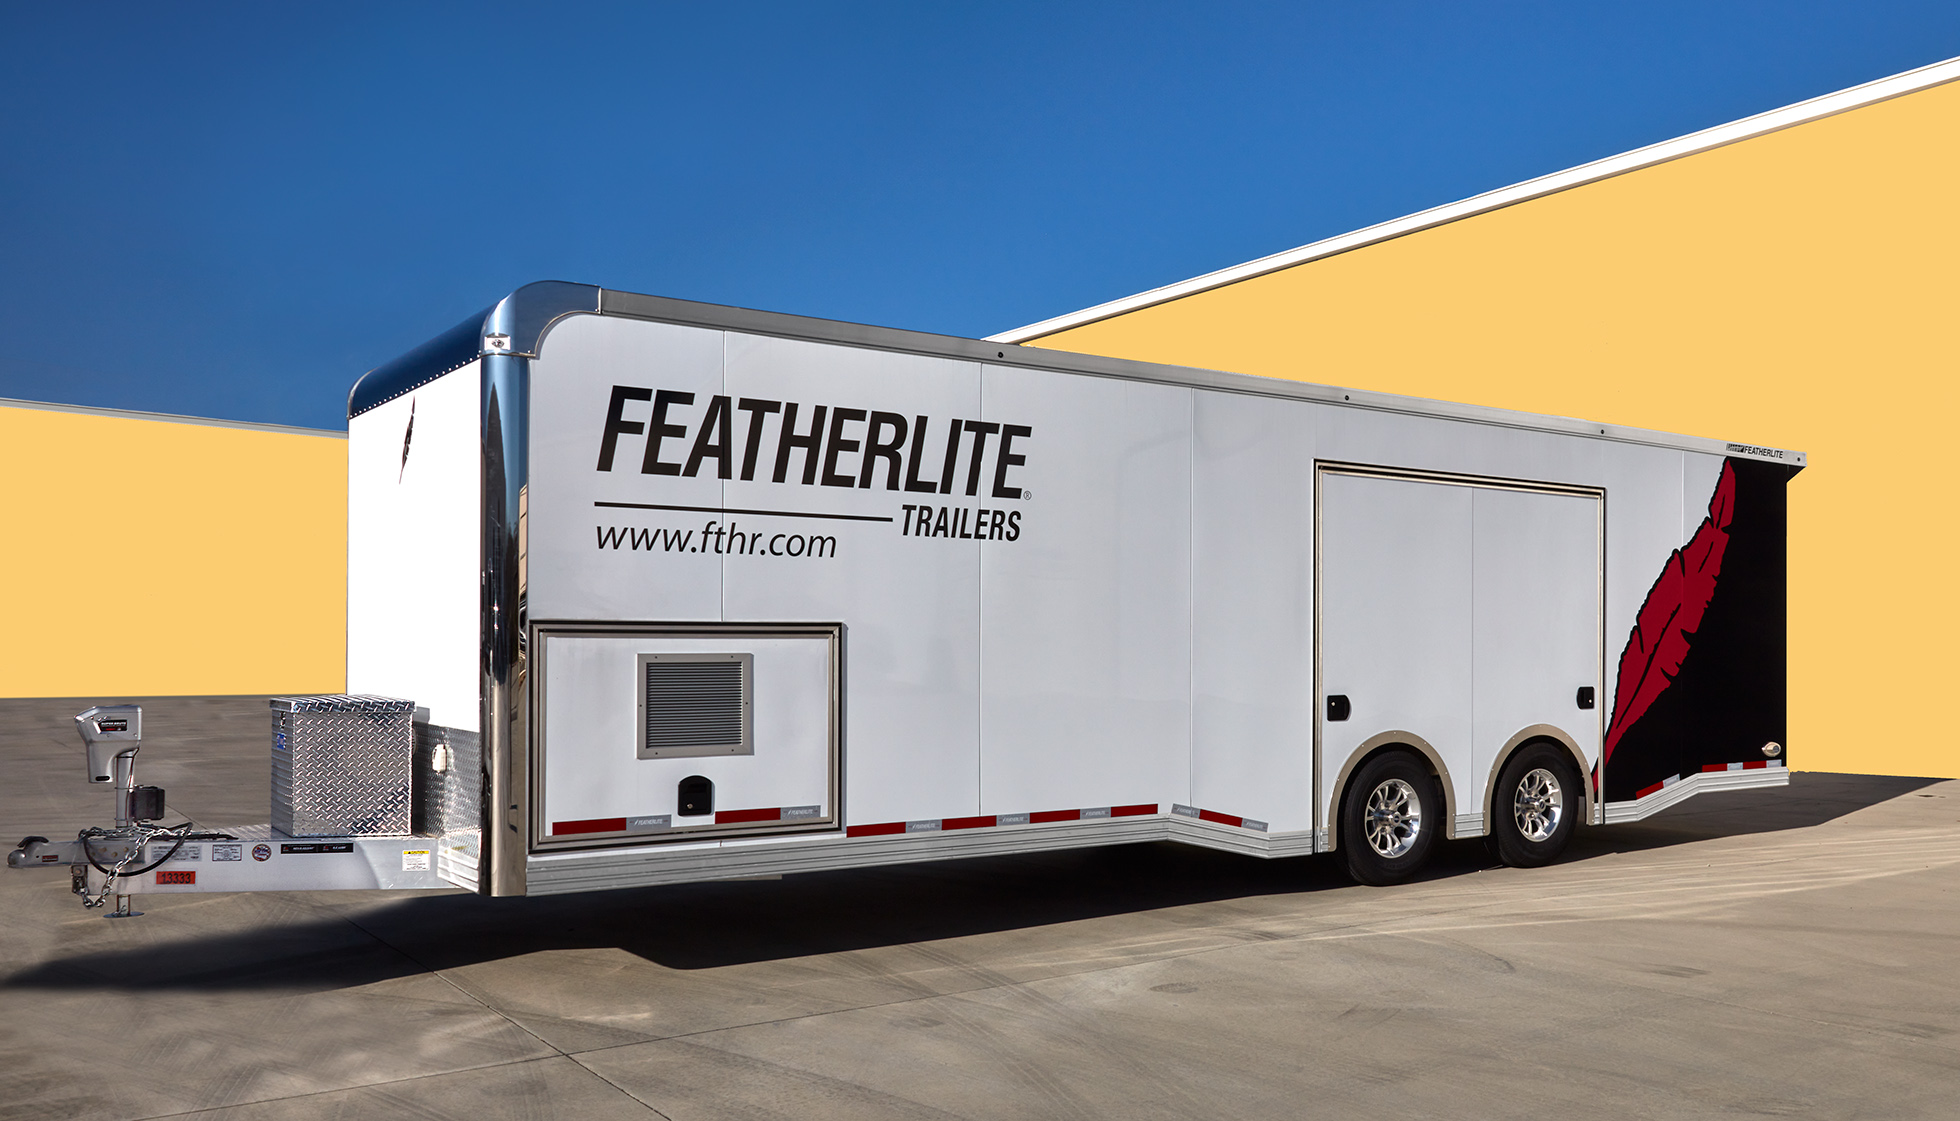 Featherlite trailer wrap